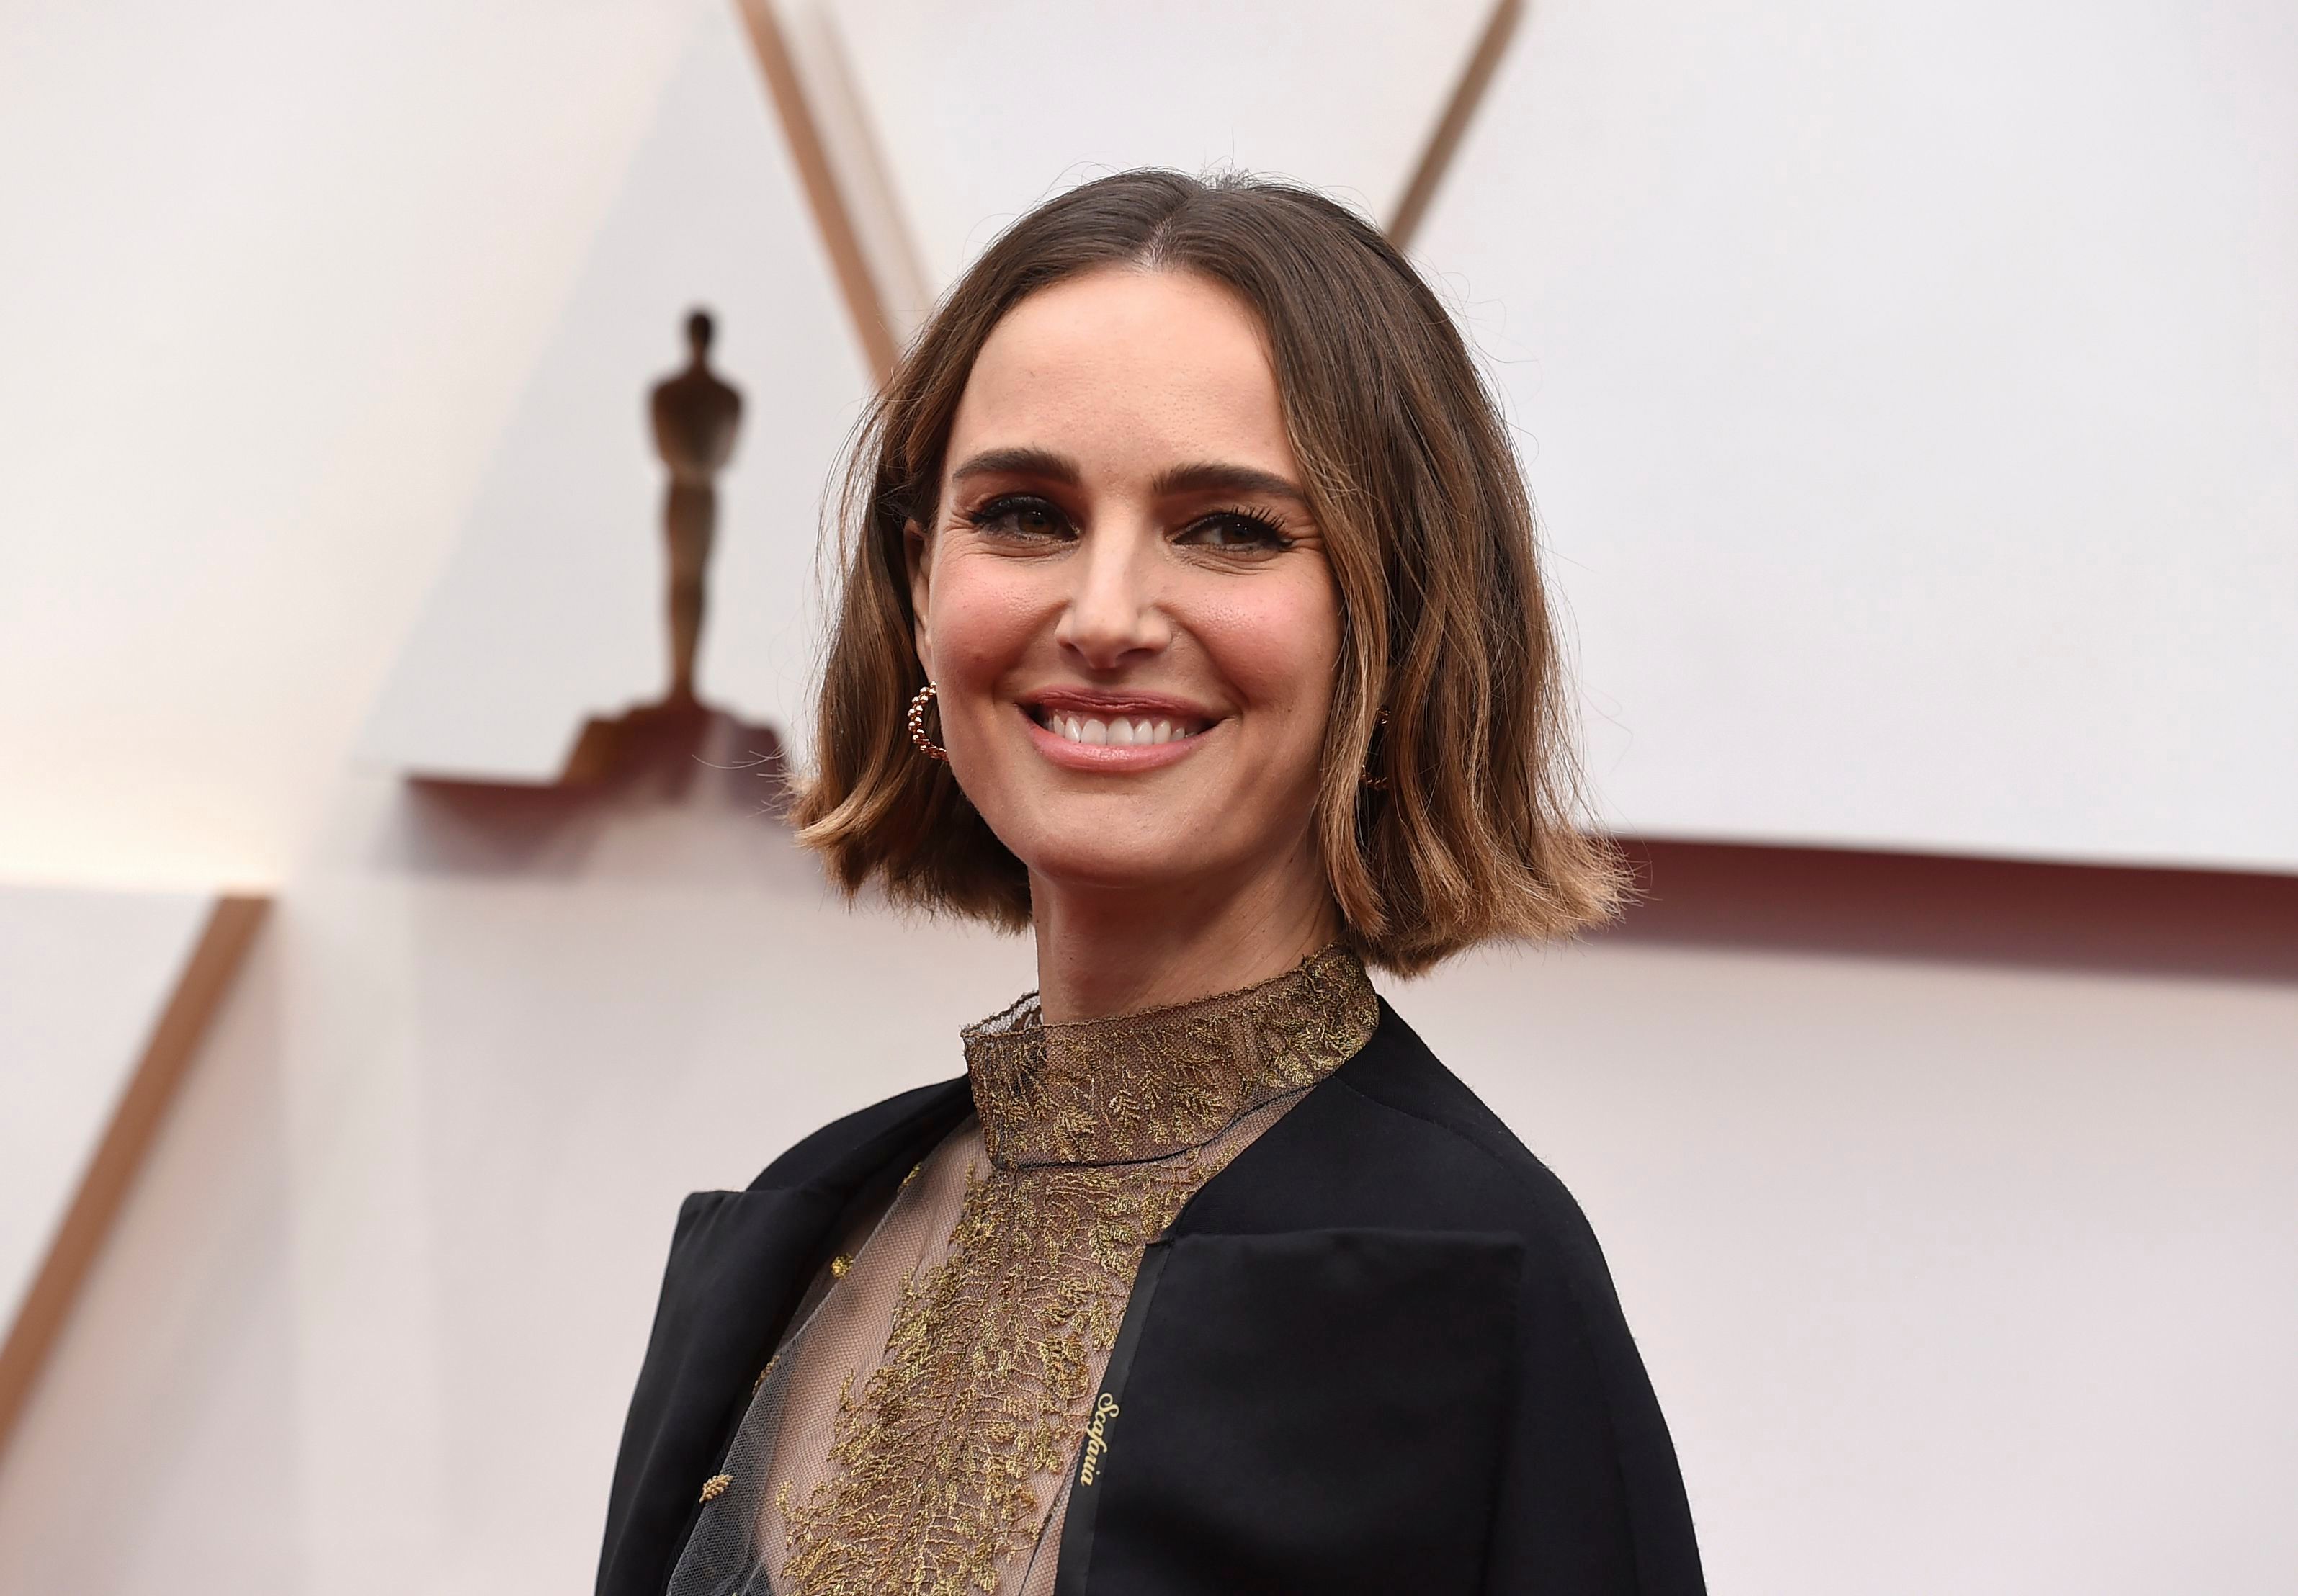 natalie Portman Makes Statement About Female Directors At 2020 Oscars – Wwd